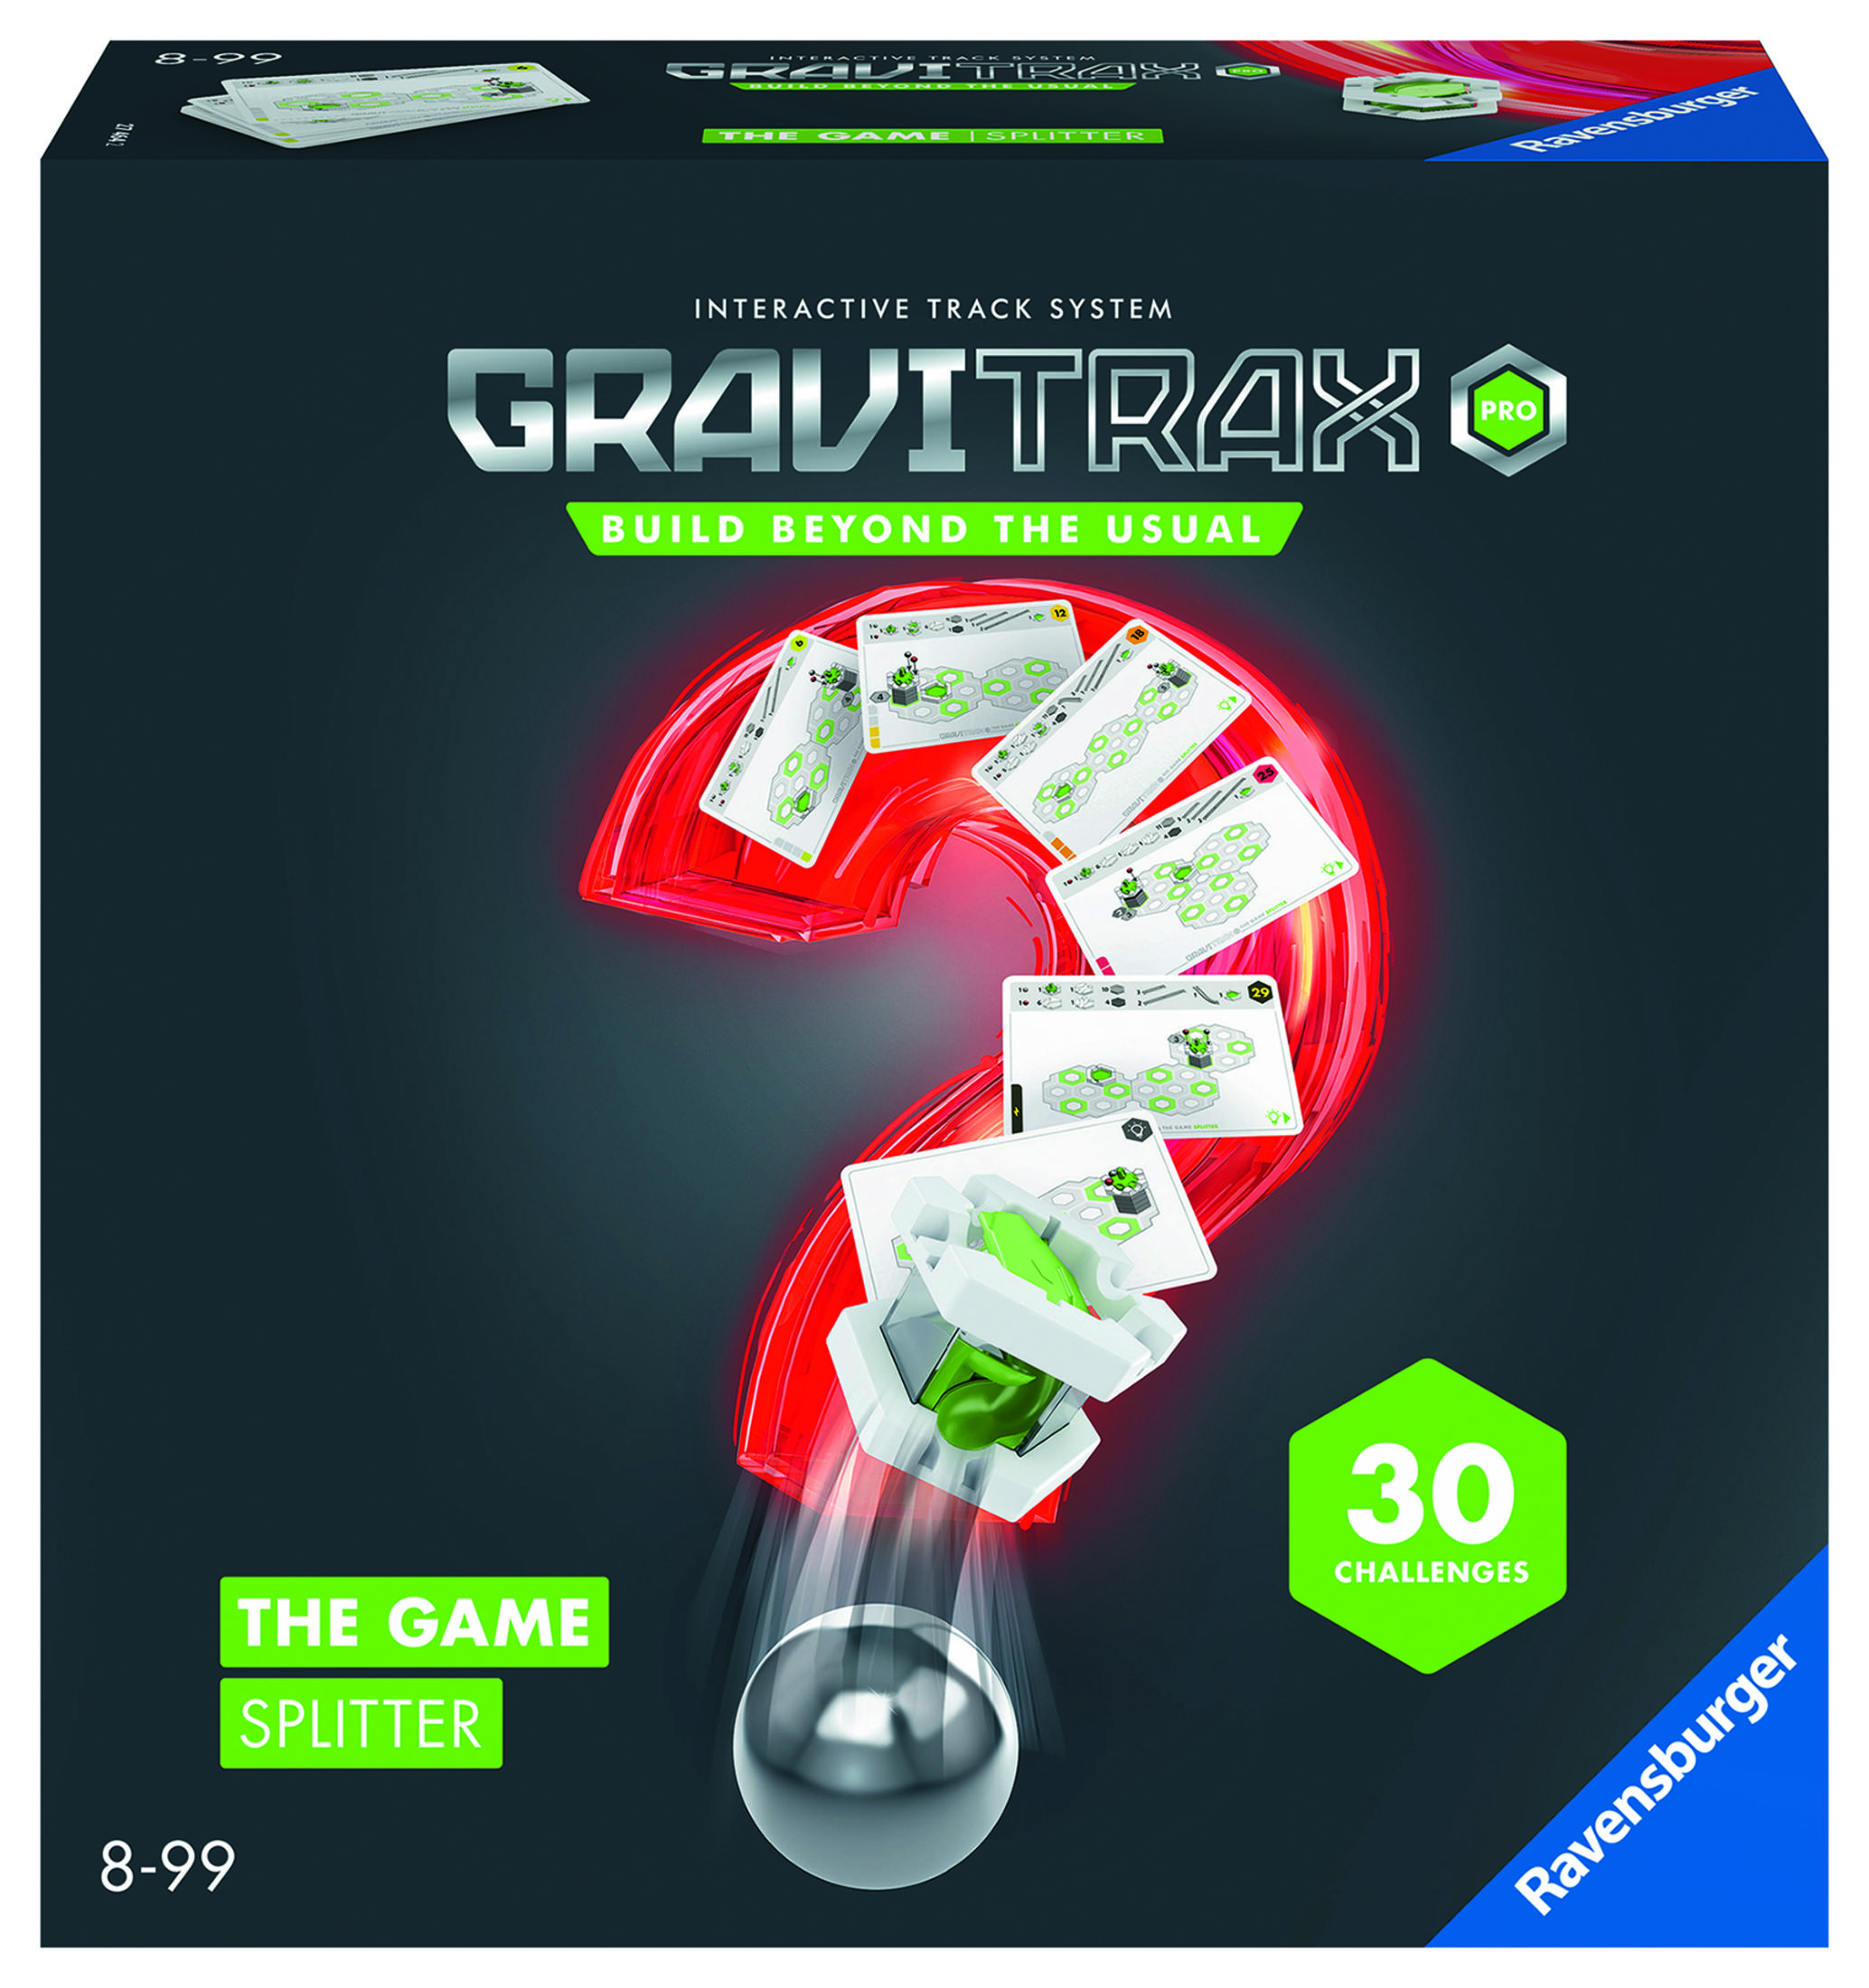 THE PRO RAVENSBURGER Mehrfarbig 27464 SPLIT GRAVITRAX GAME Gesellschaftsspiel